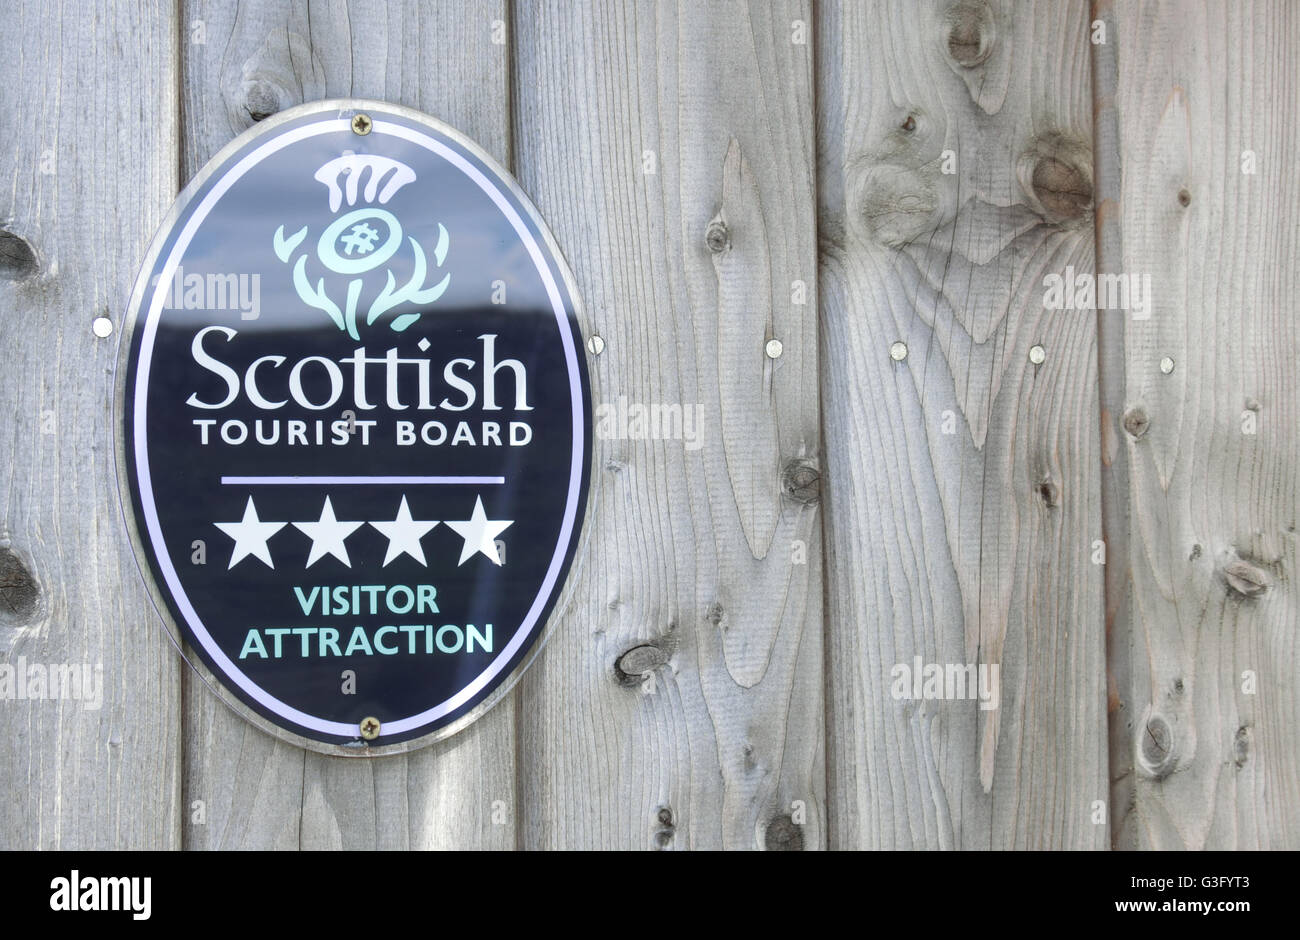 Scottish Tourist Board Four Star Visitor Attraction, Scotland, UK Stock Photo